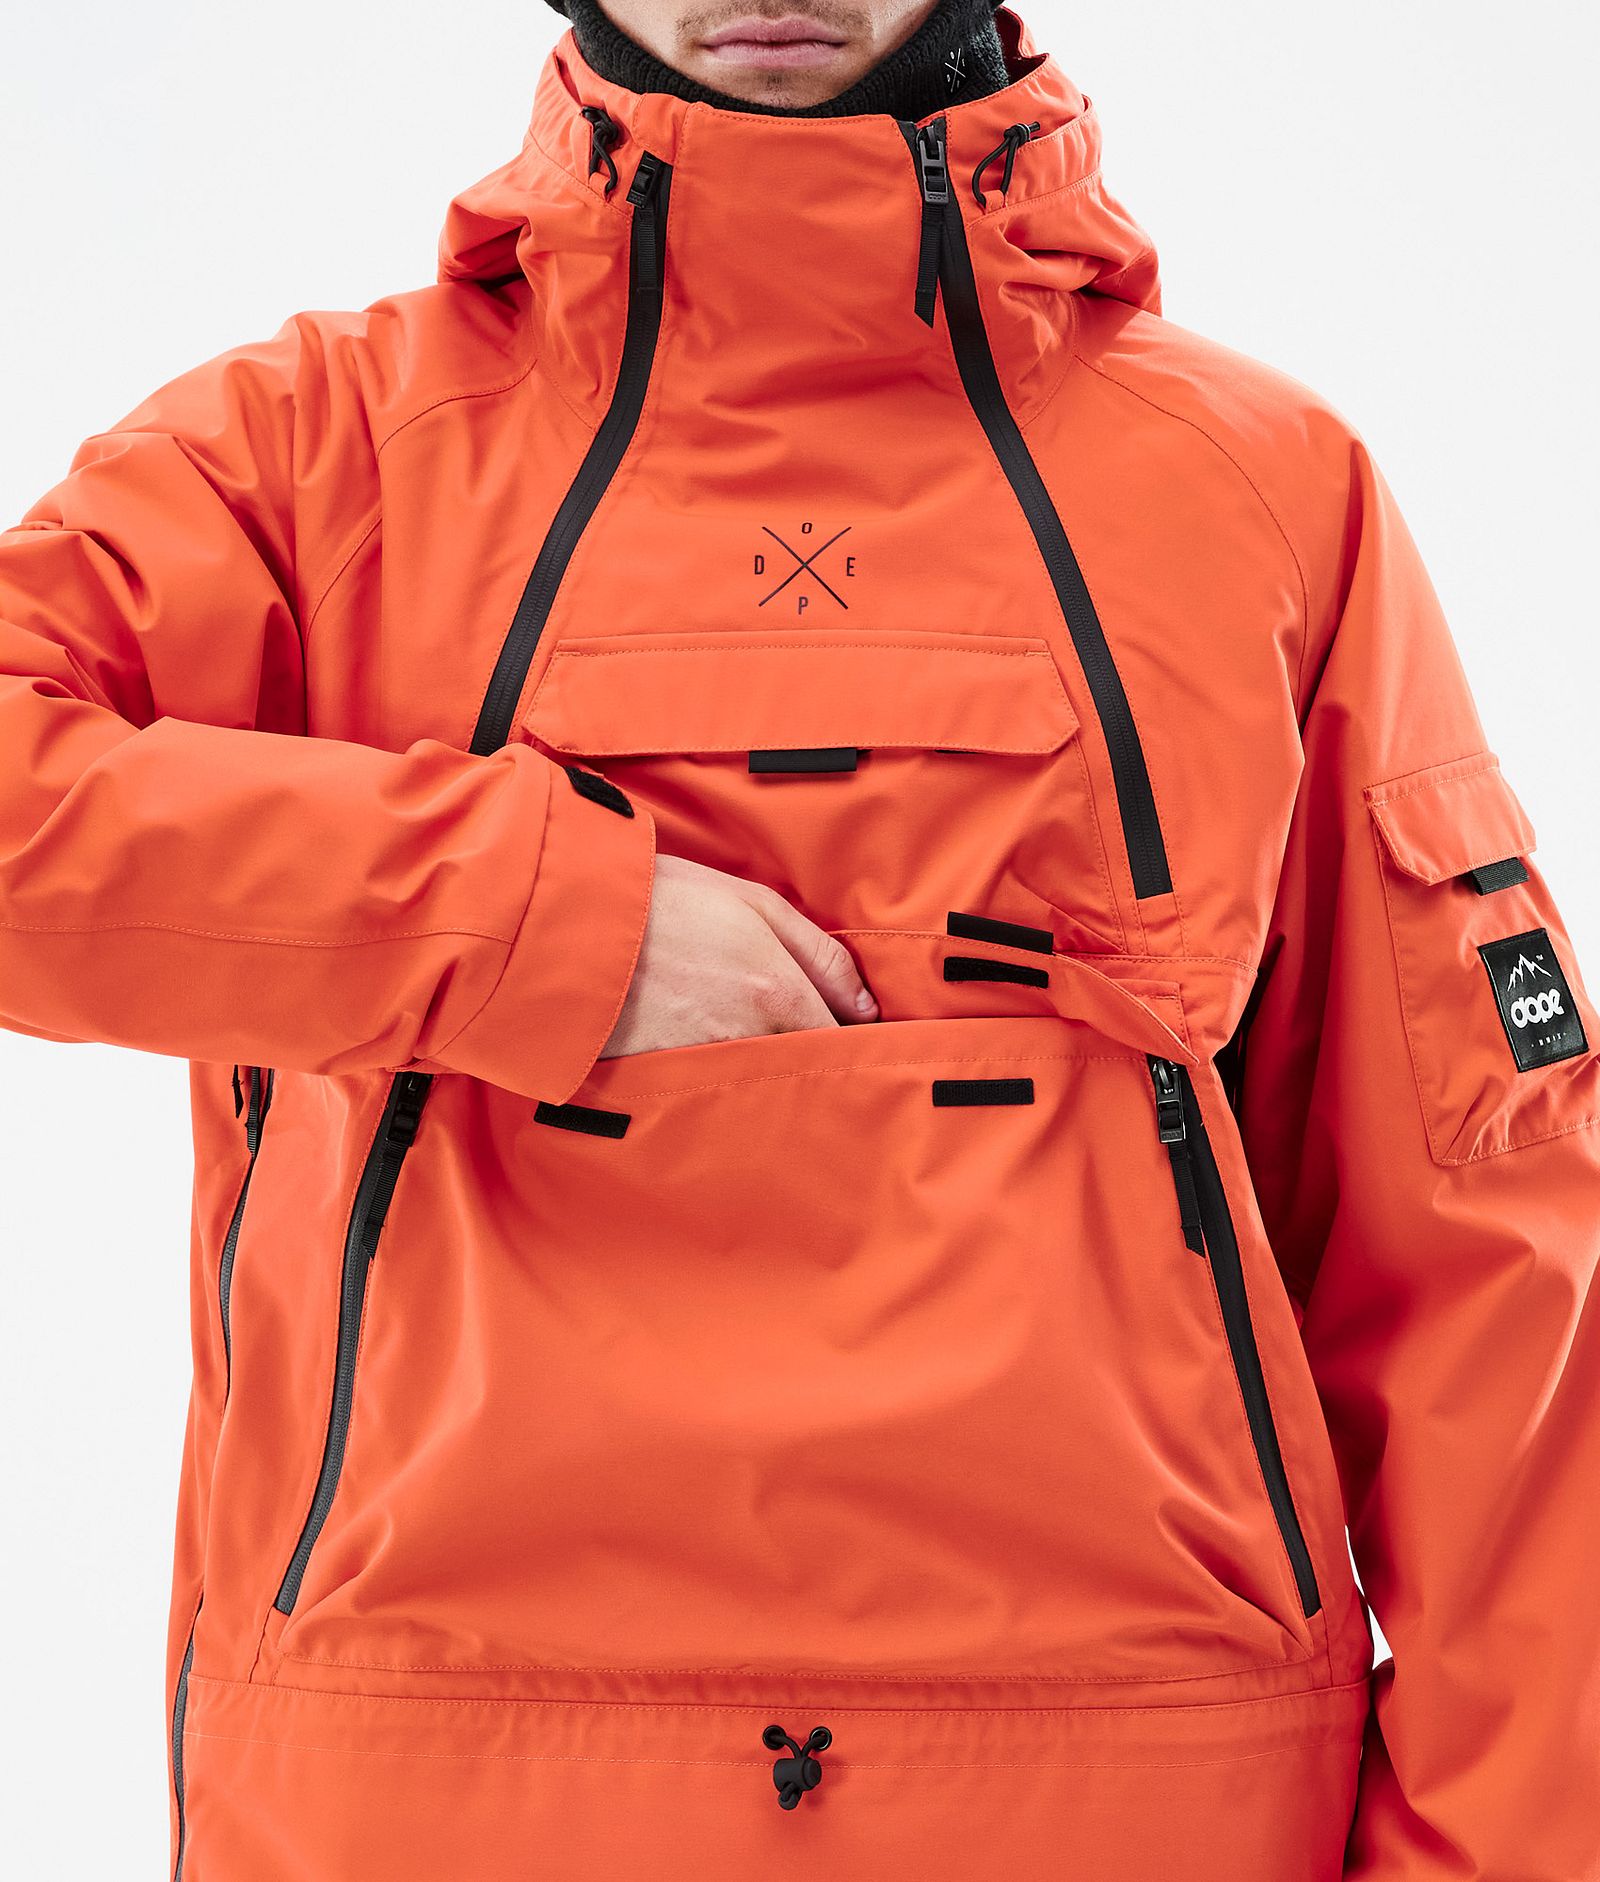 Dope Akin Veste de Ski Homme Orange, Image 8 sur 8